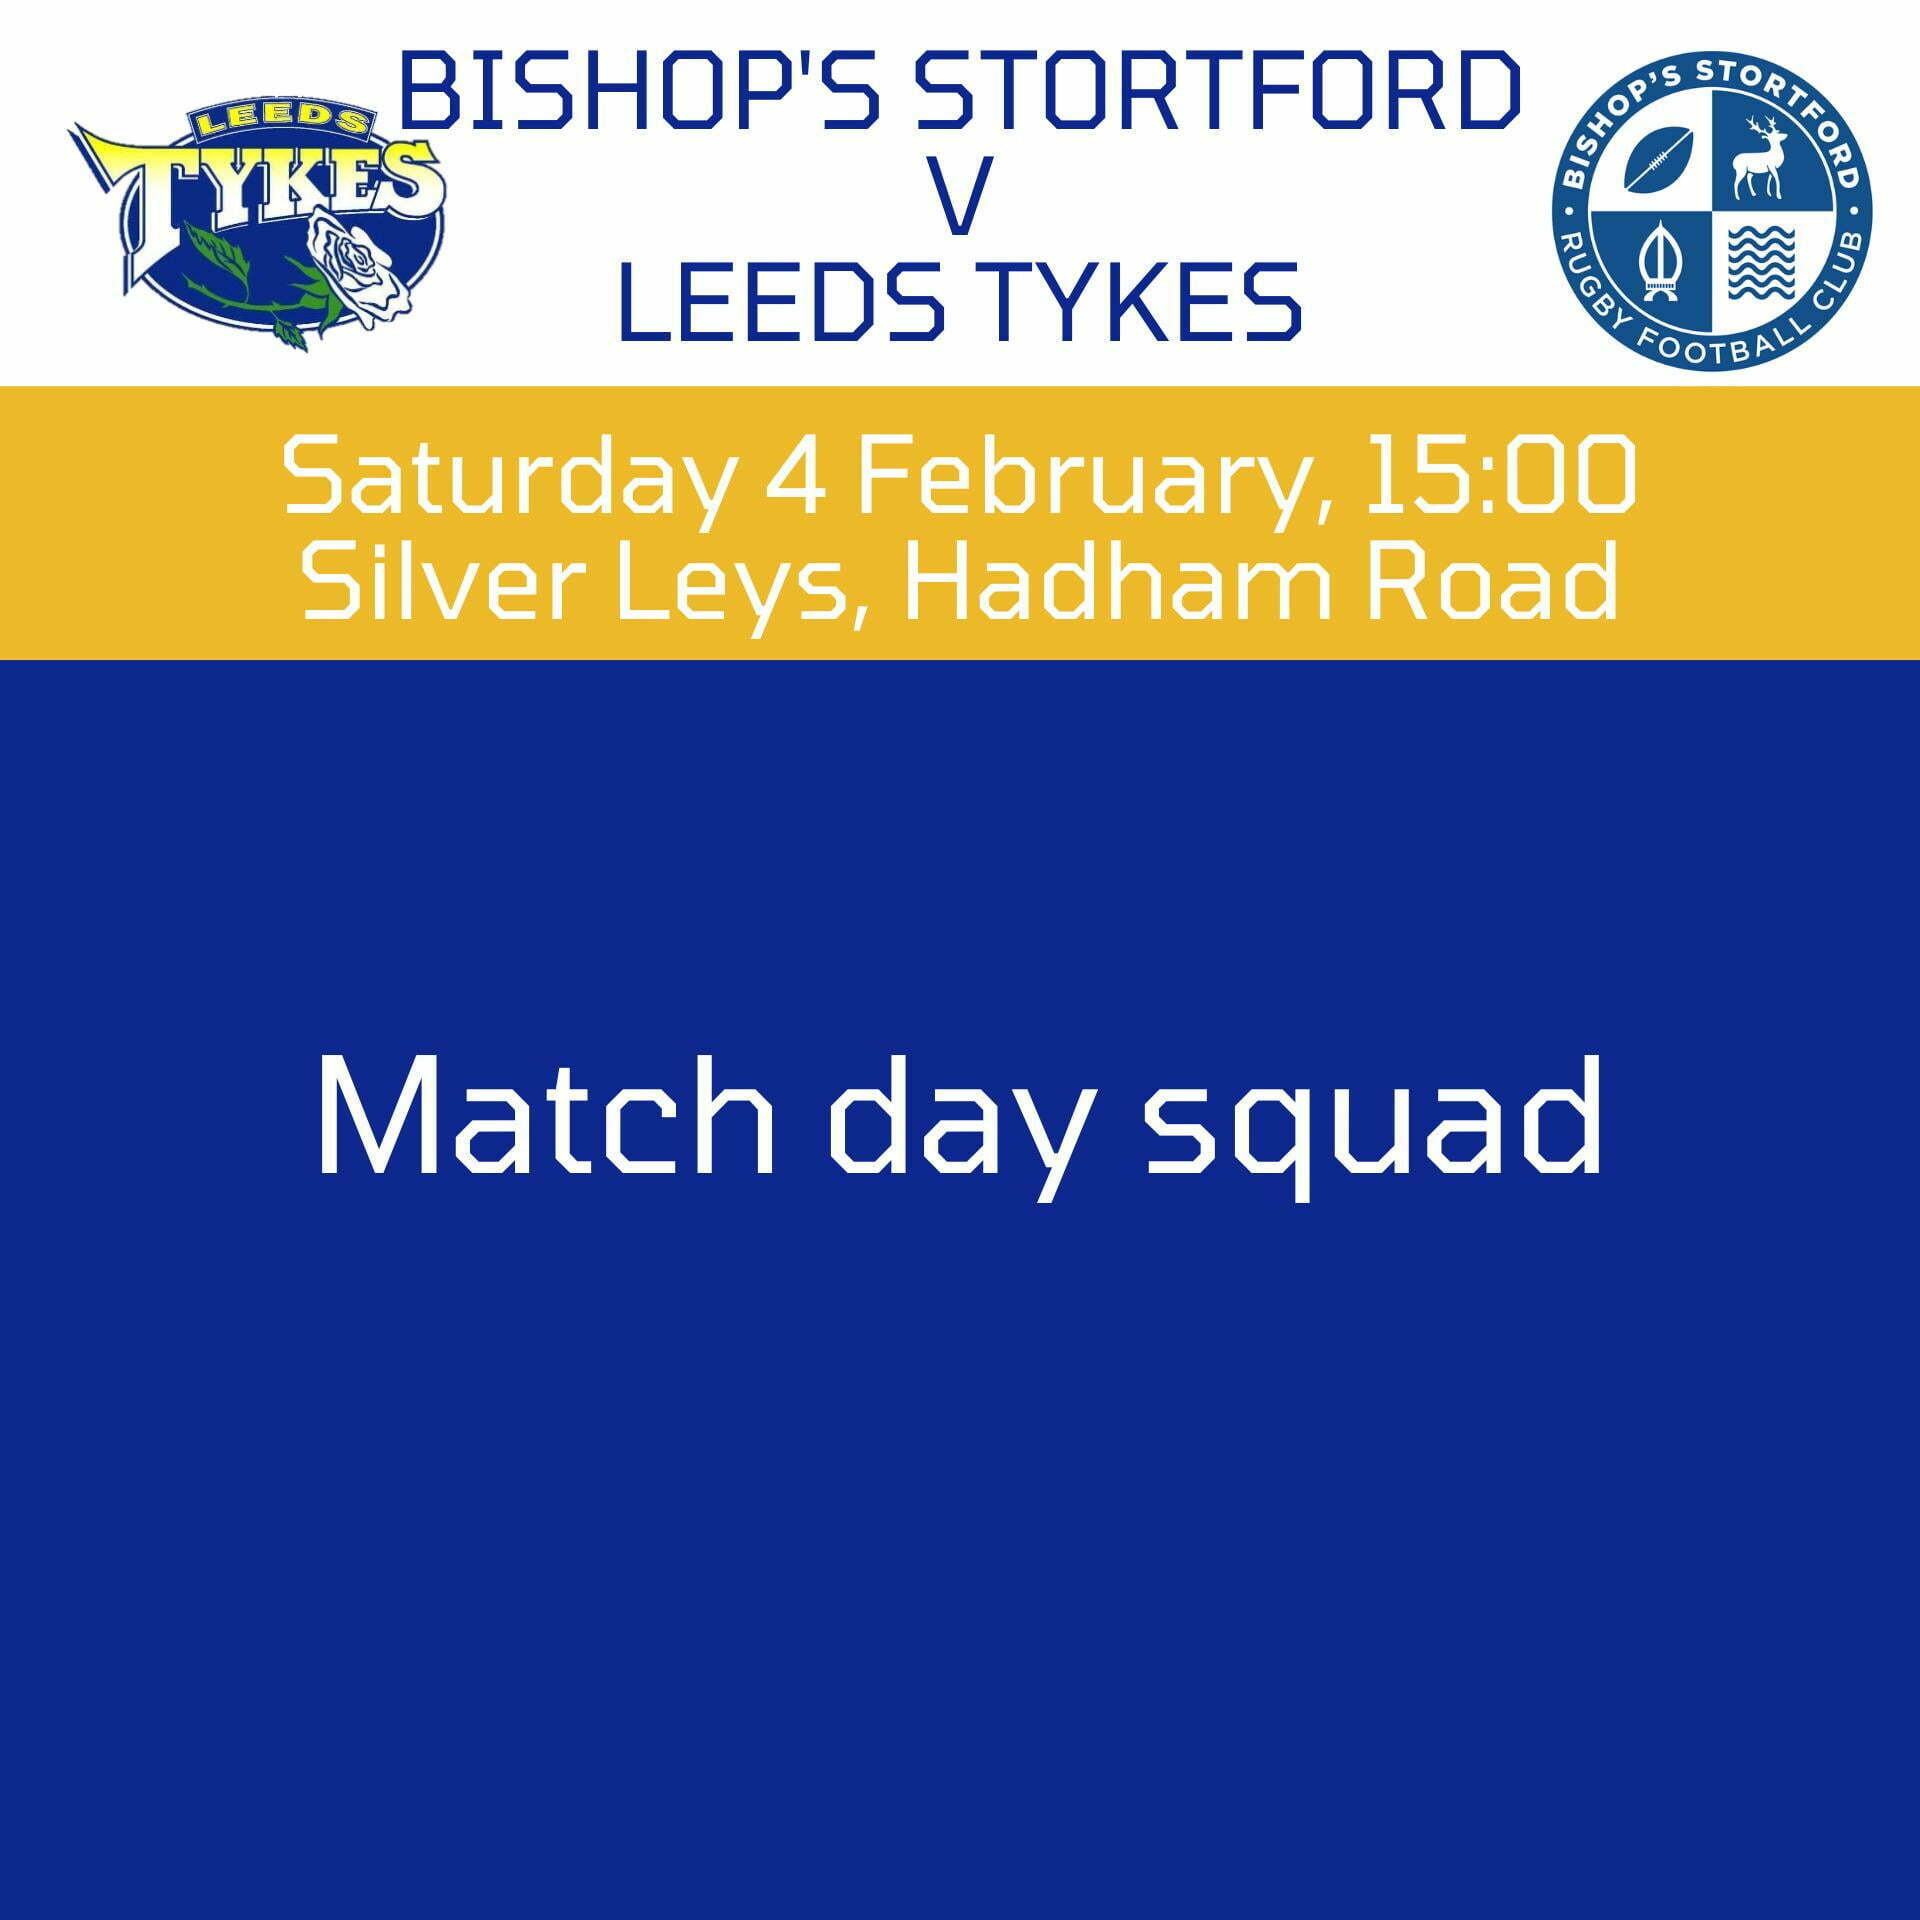 Bishop's Stortford v Leeds Tykes Saturday 18 February Match day squad